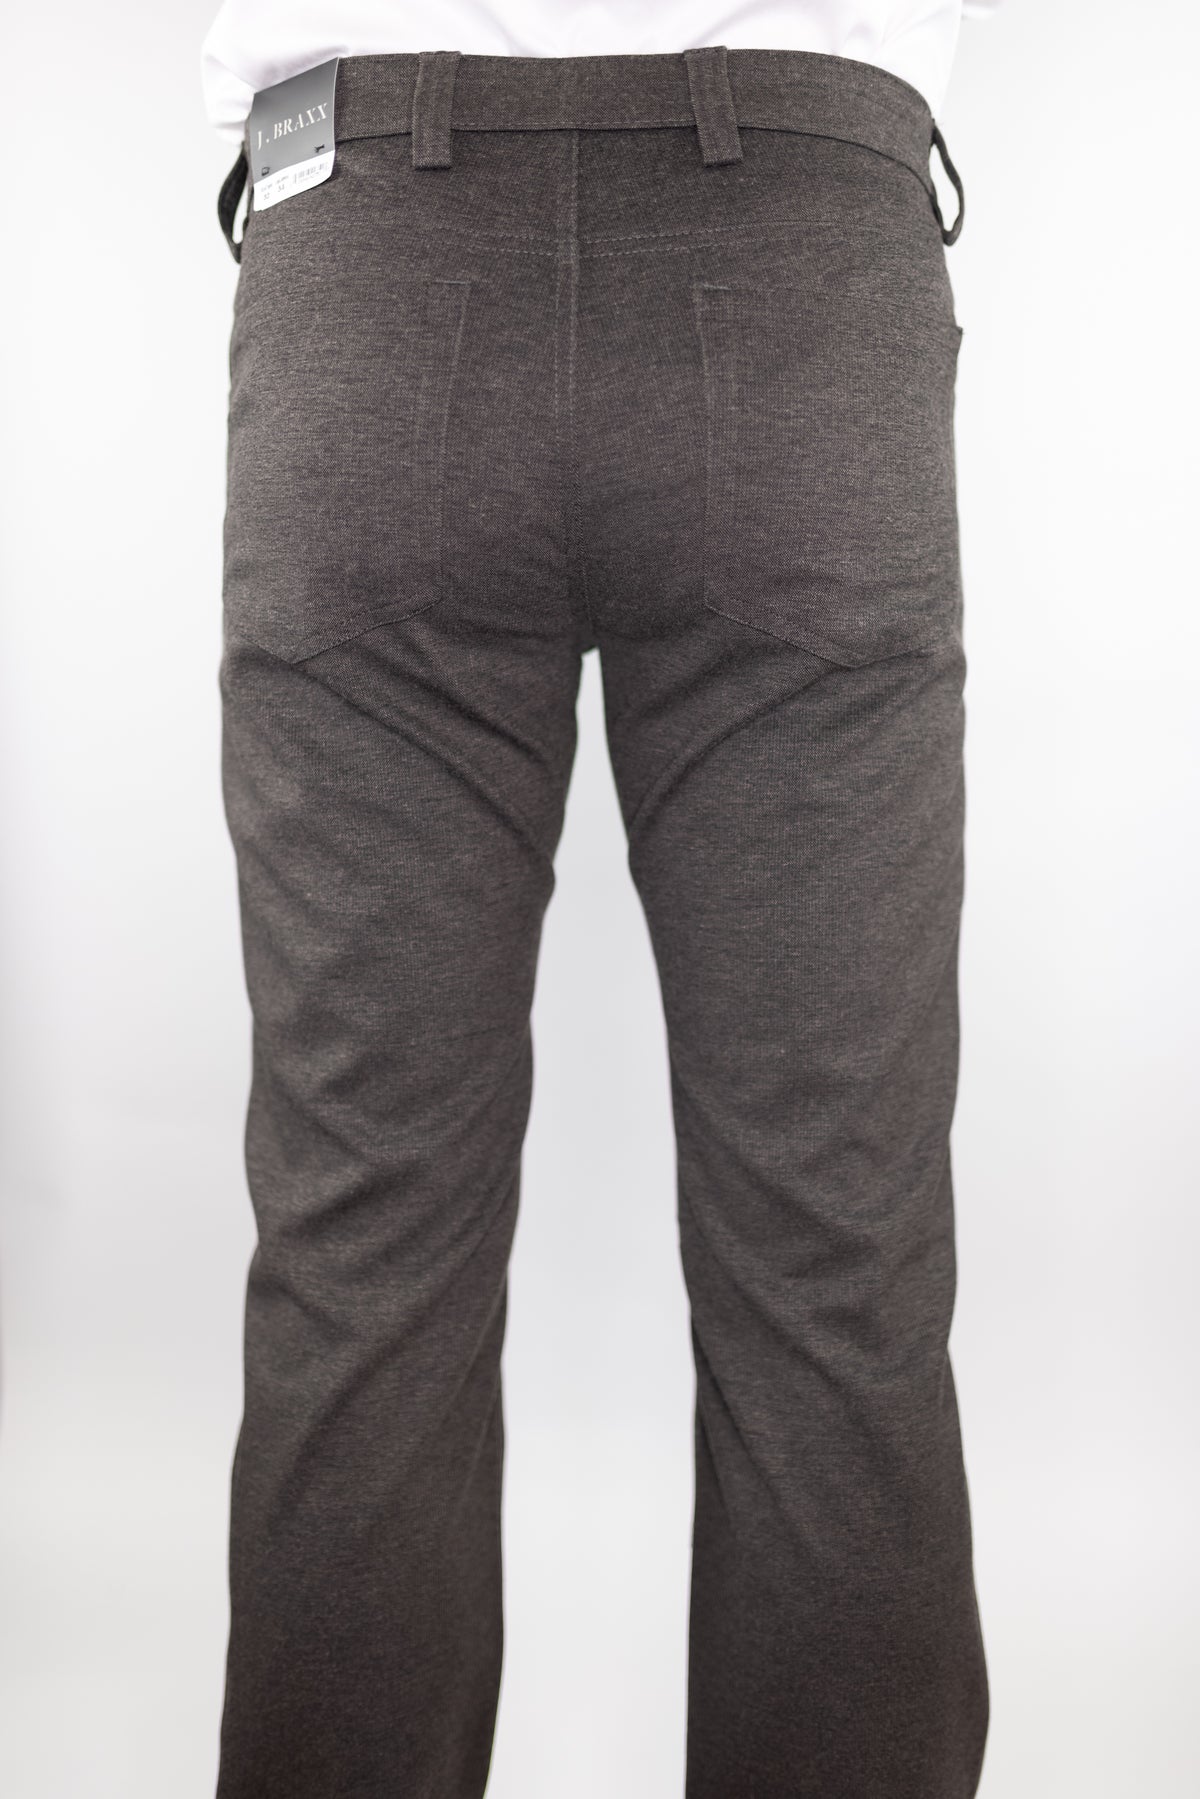 J. Braxx 5-Pocket Stretch Pants